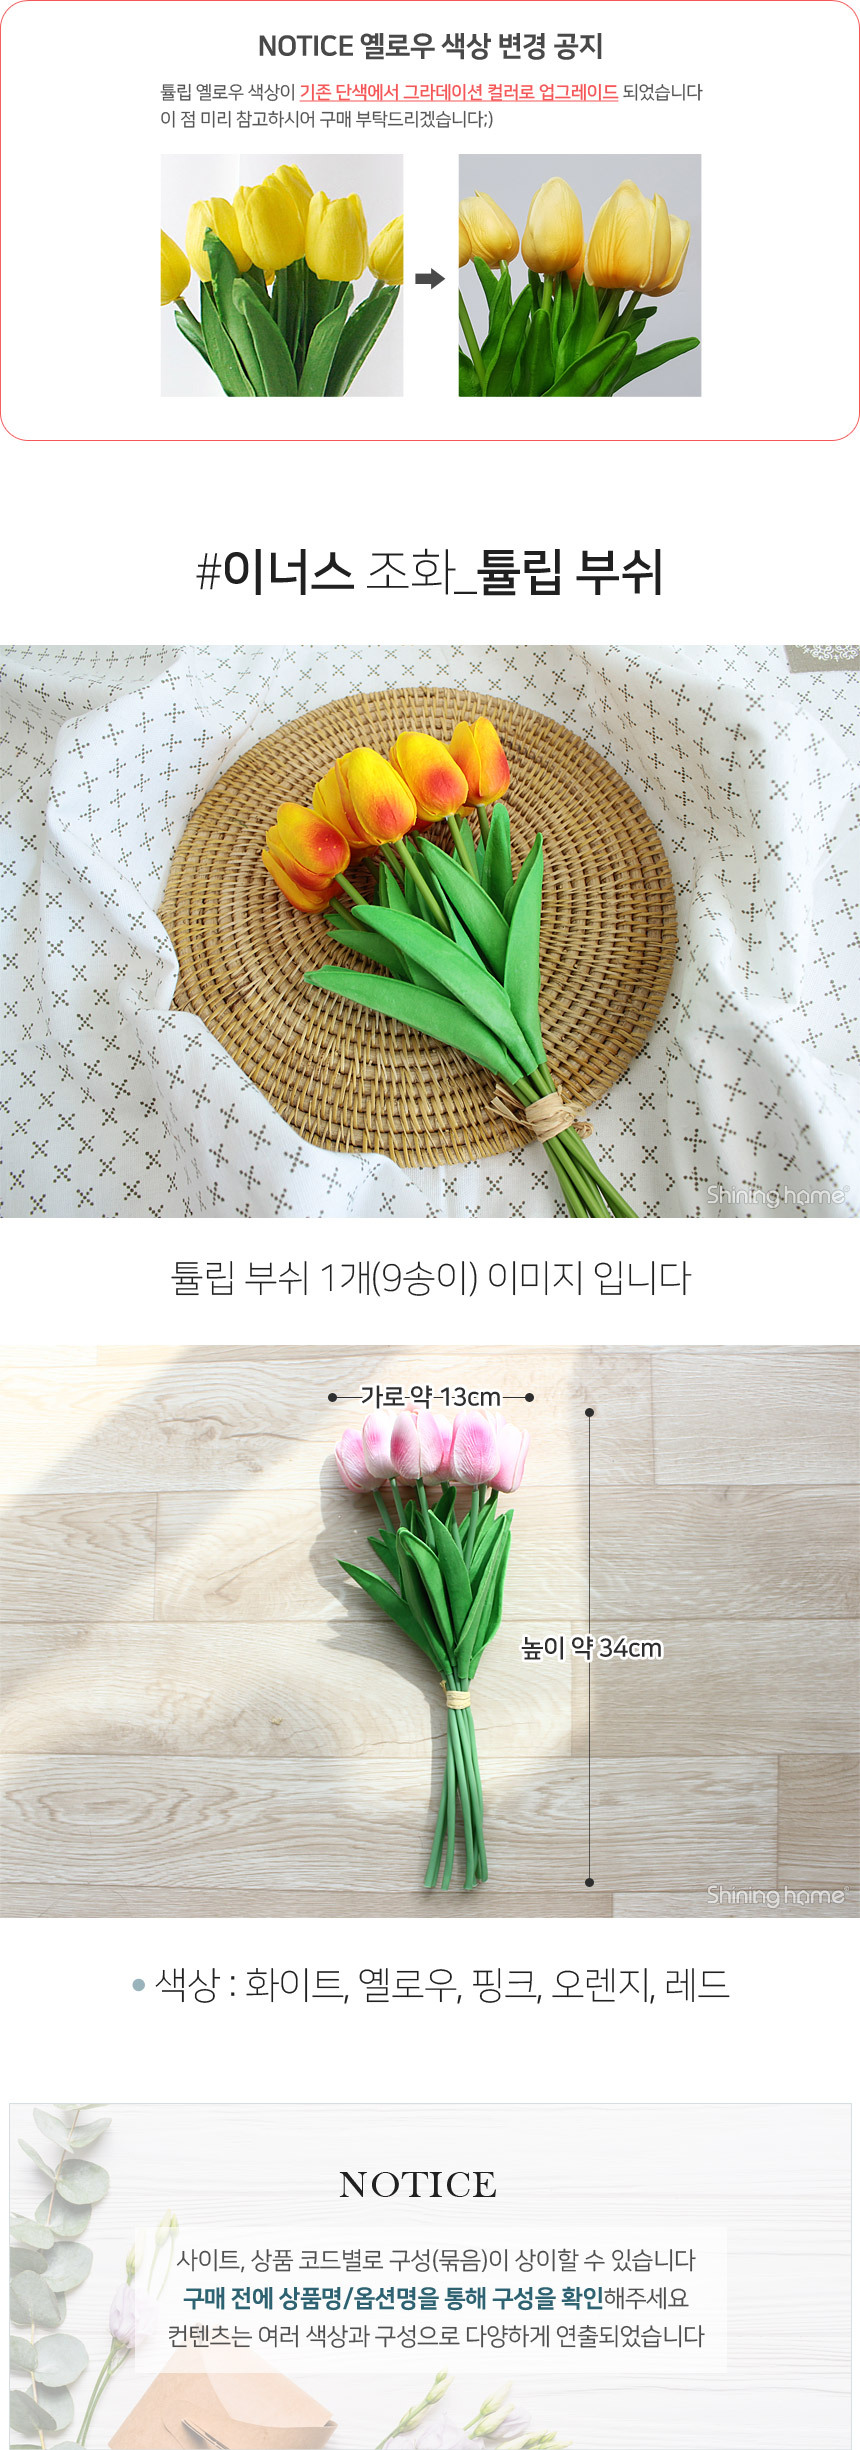 inus_flower_tulip_01.jpg